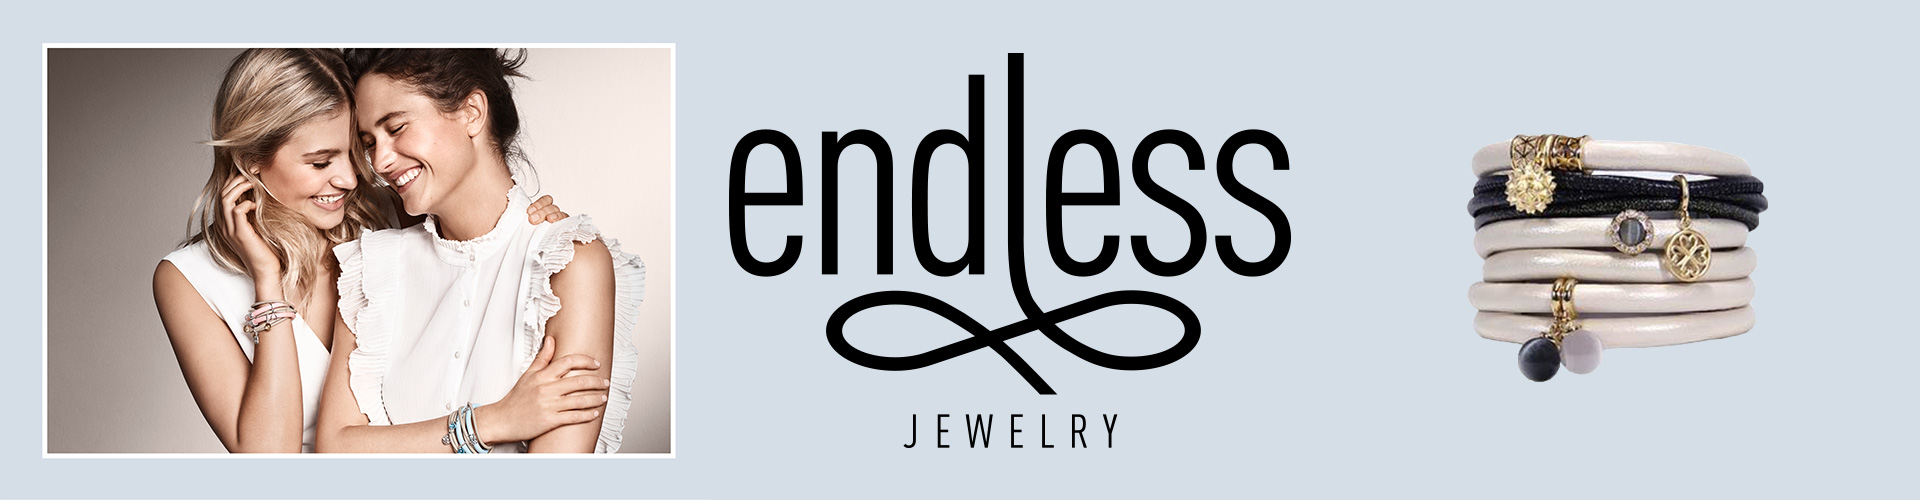 Endless Jewelry